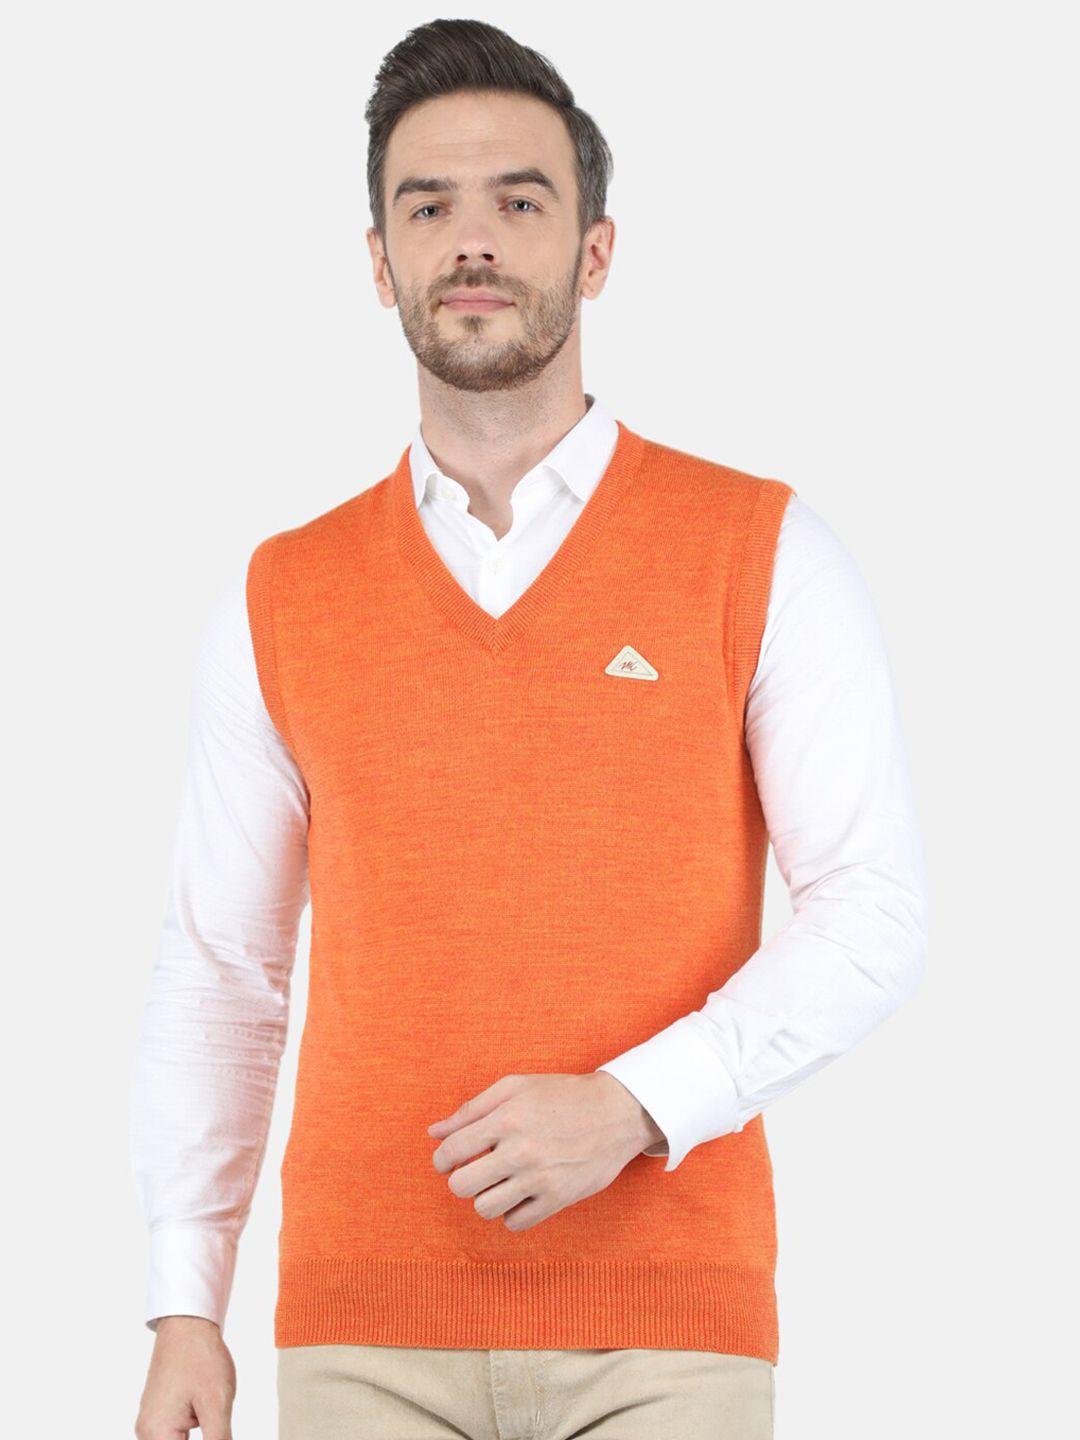 monte carlo men orange v neck sweater vest